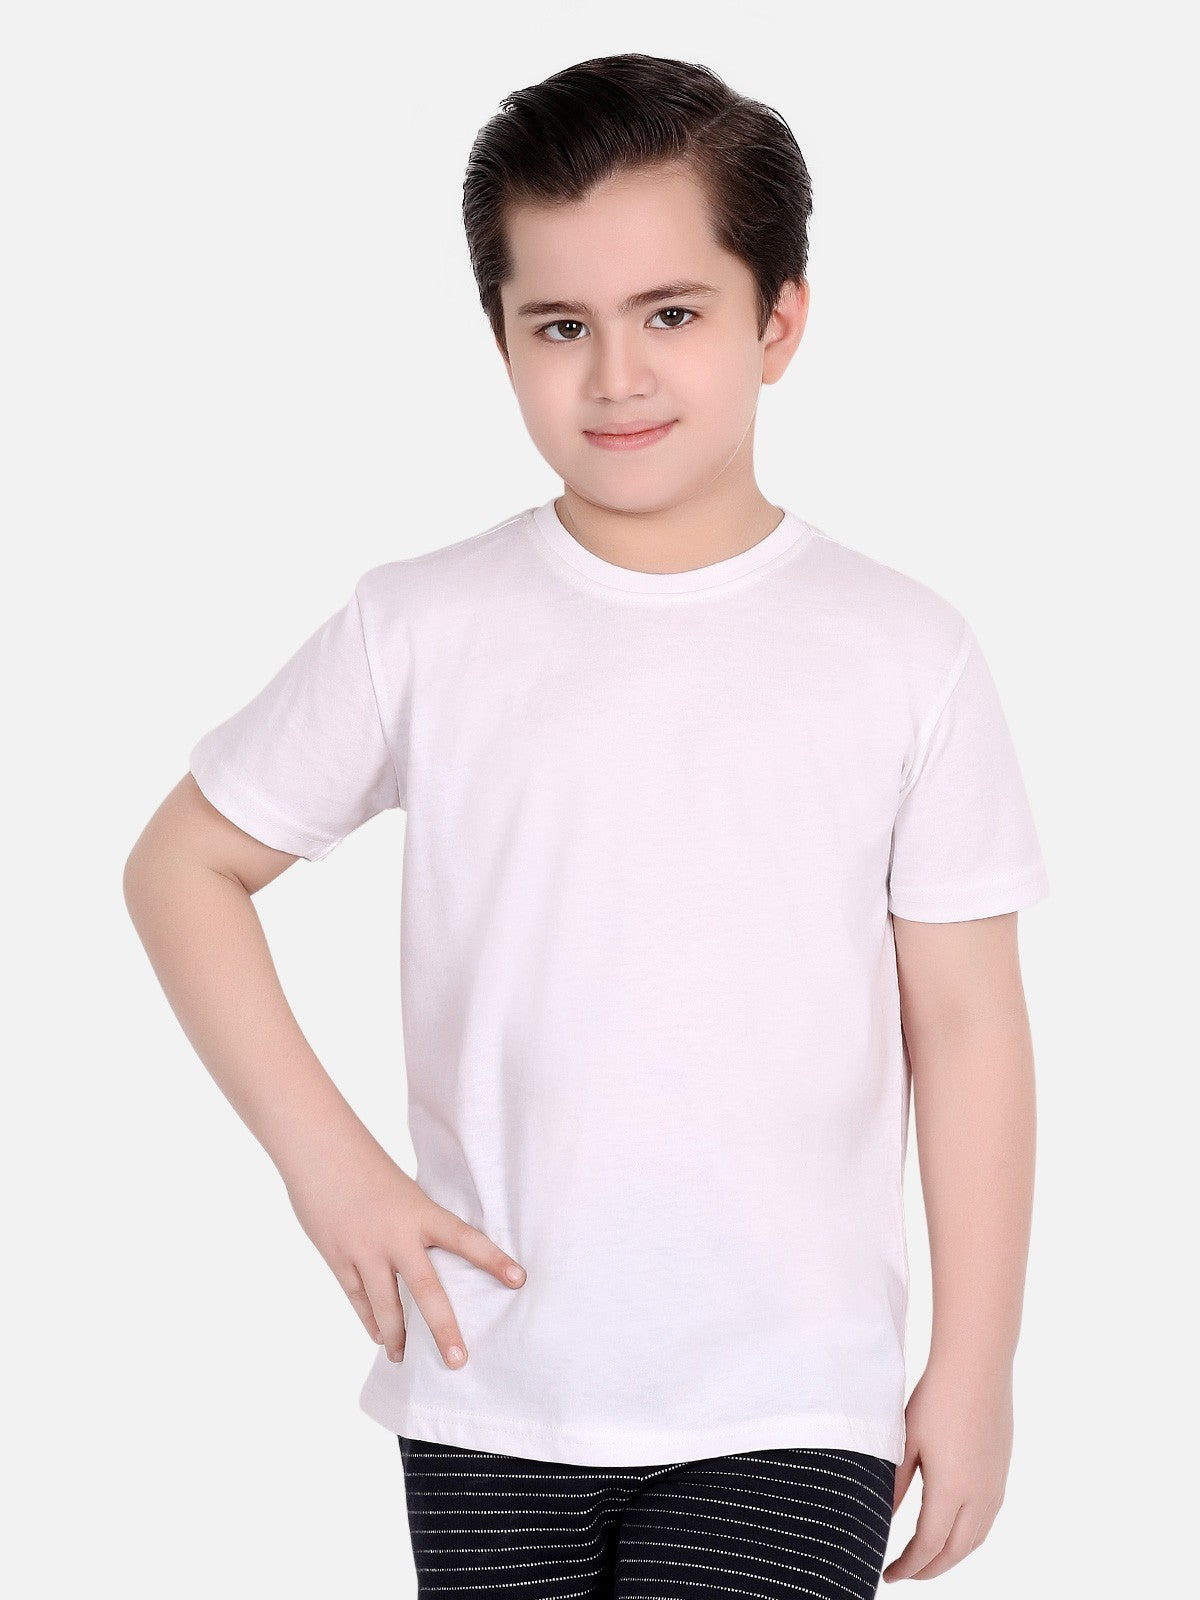 Boy's White Half Sleeves Basic Tee - EBTBT19-022